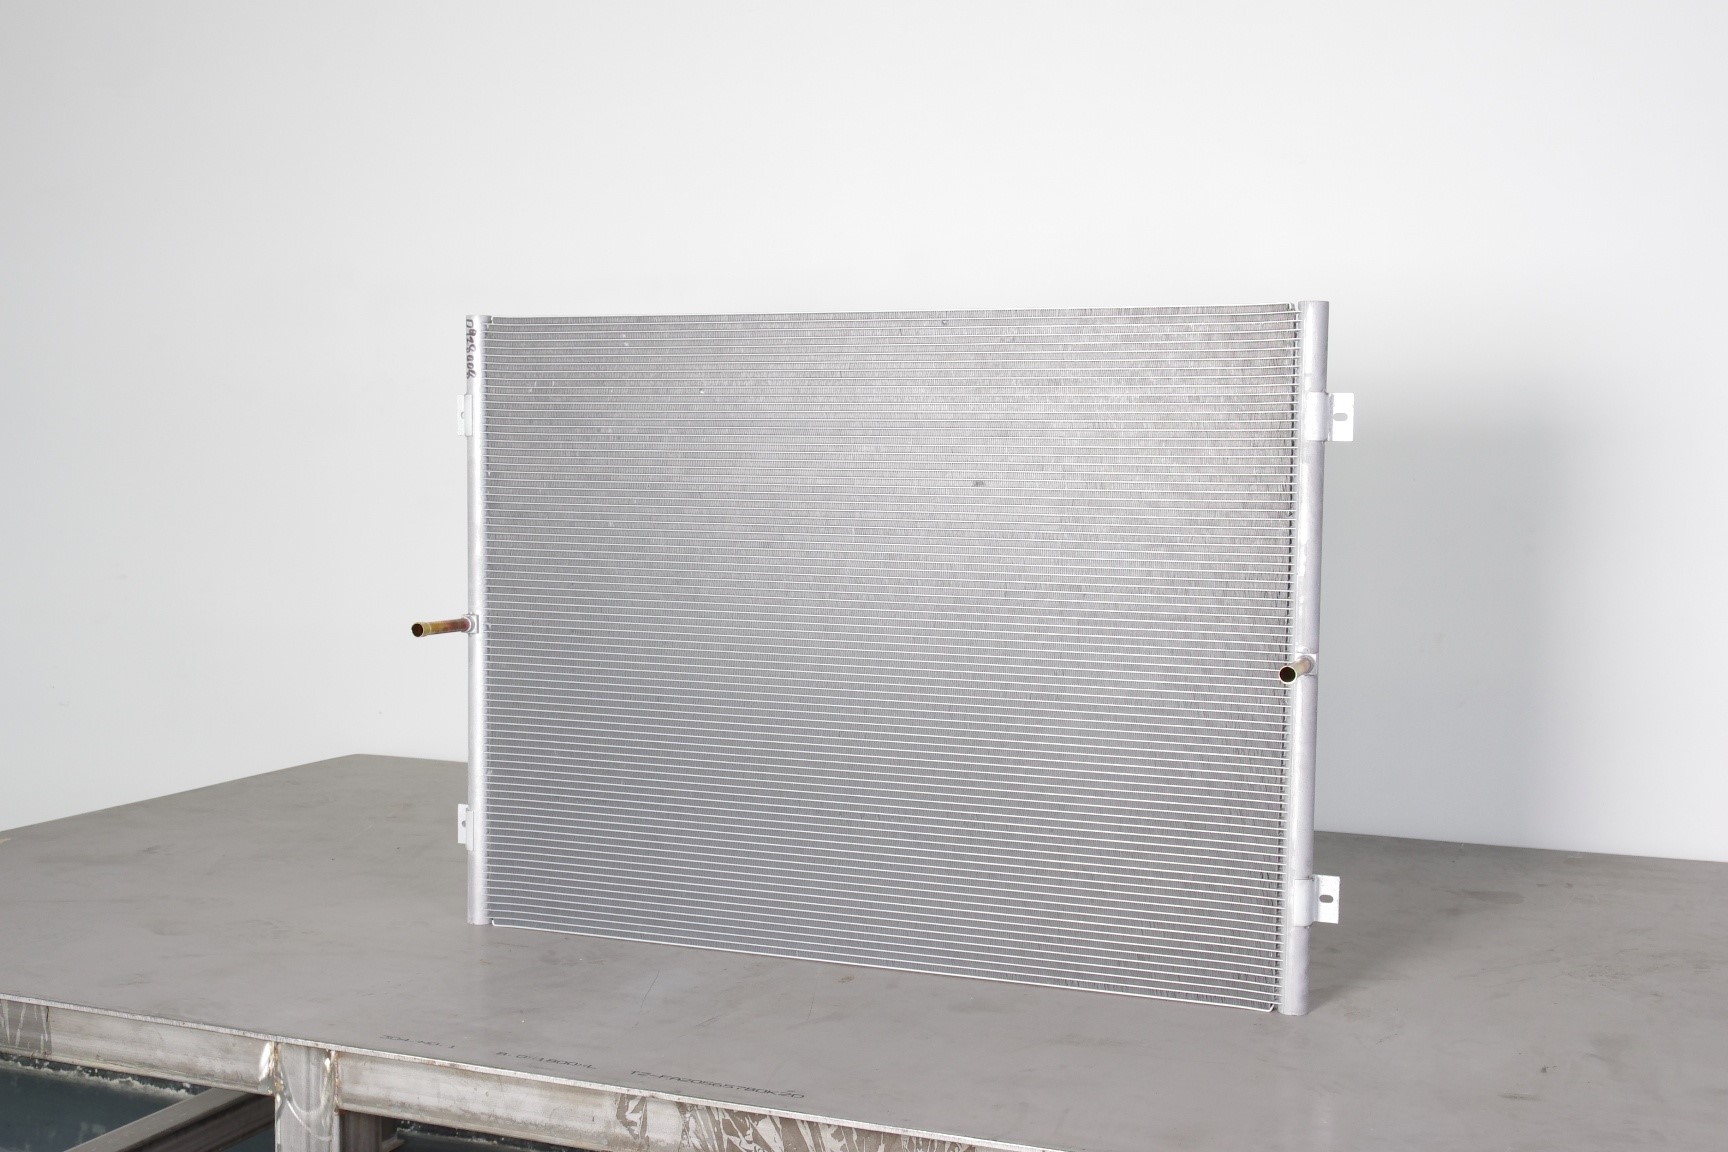 RefPower - Dunan microchannel heat exchanger